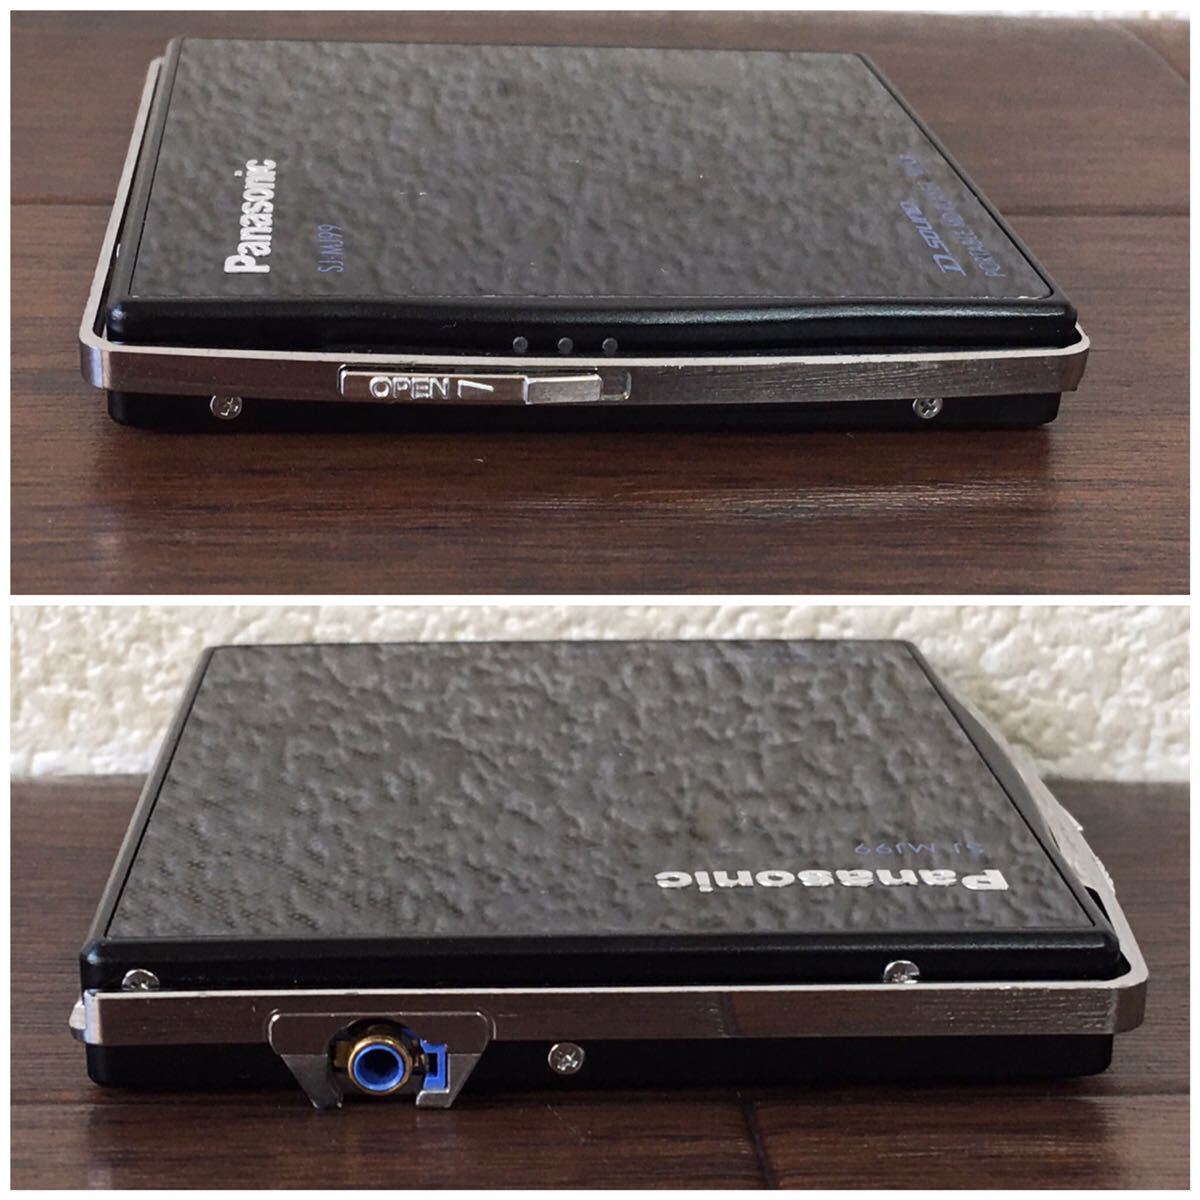 Panasonic Panasonic SJ-MJ99 portable MD player operation not yet verification present condition delivery 